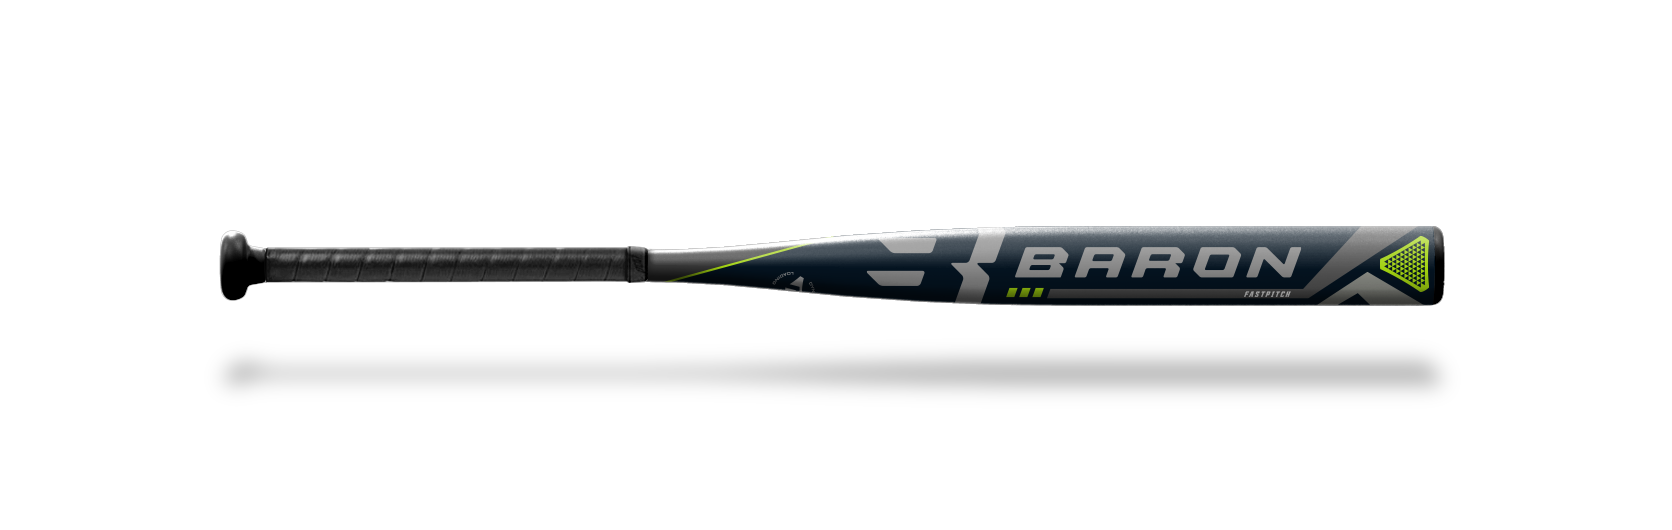 Fastpitch bat graphics softball design